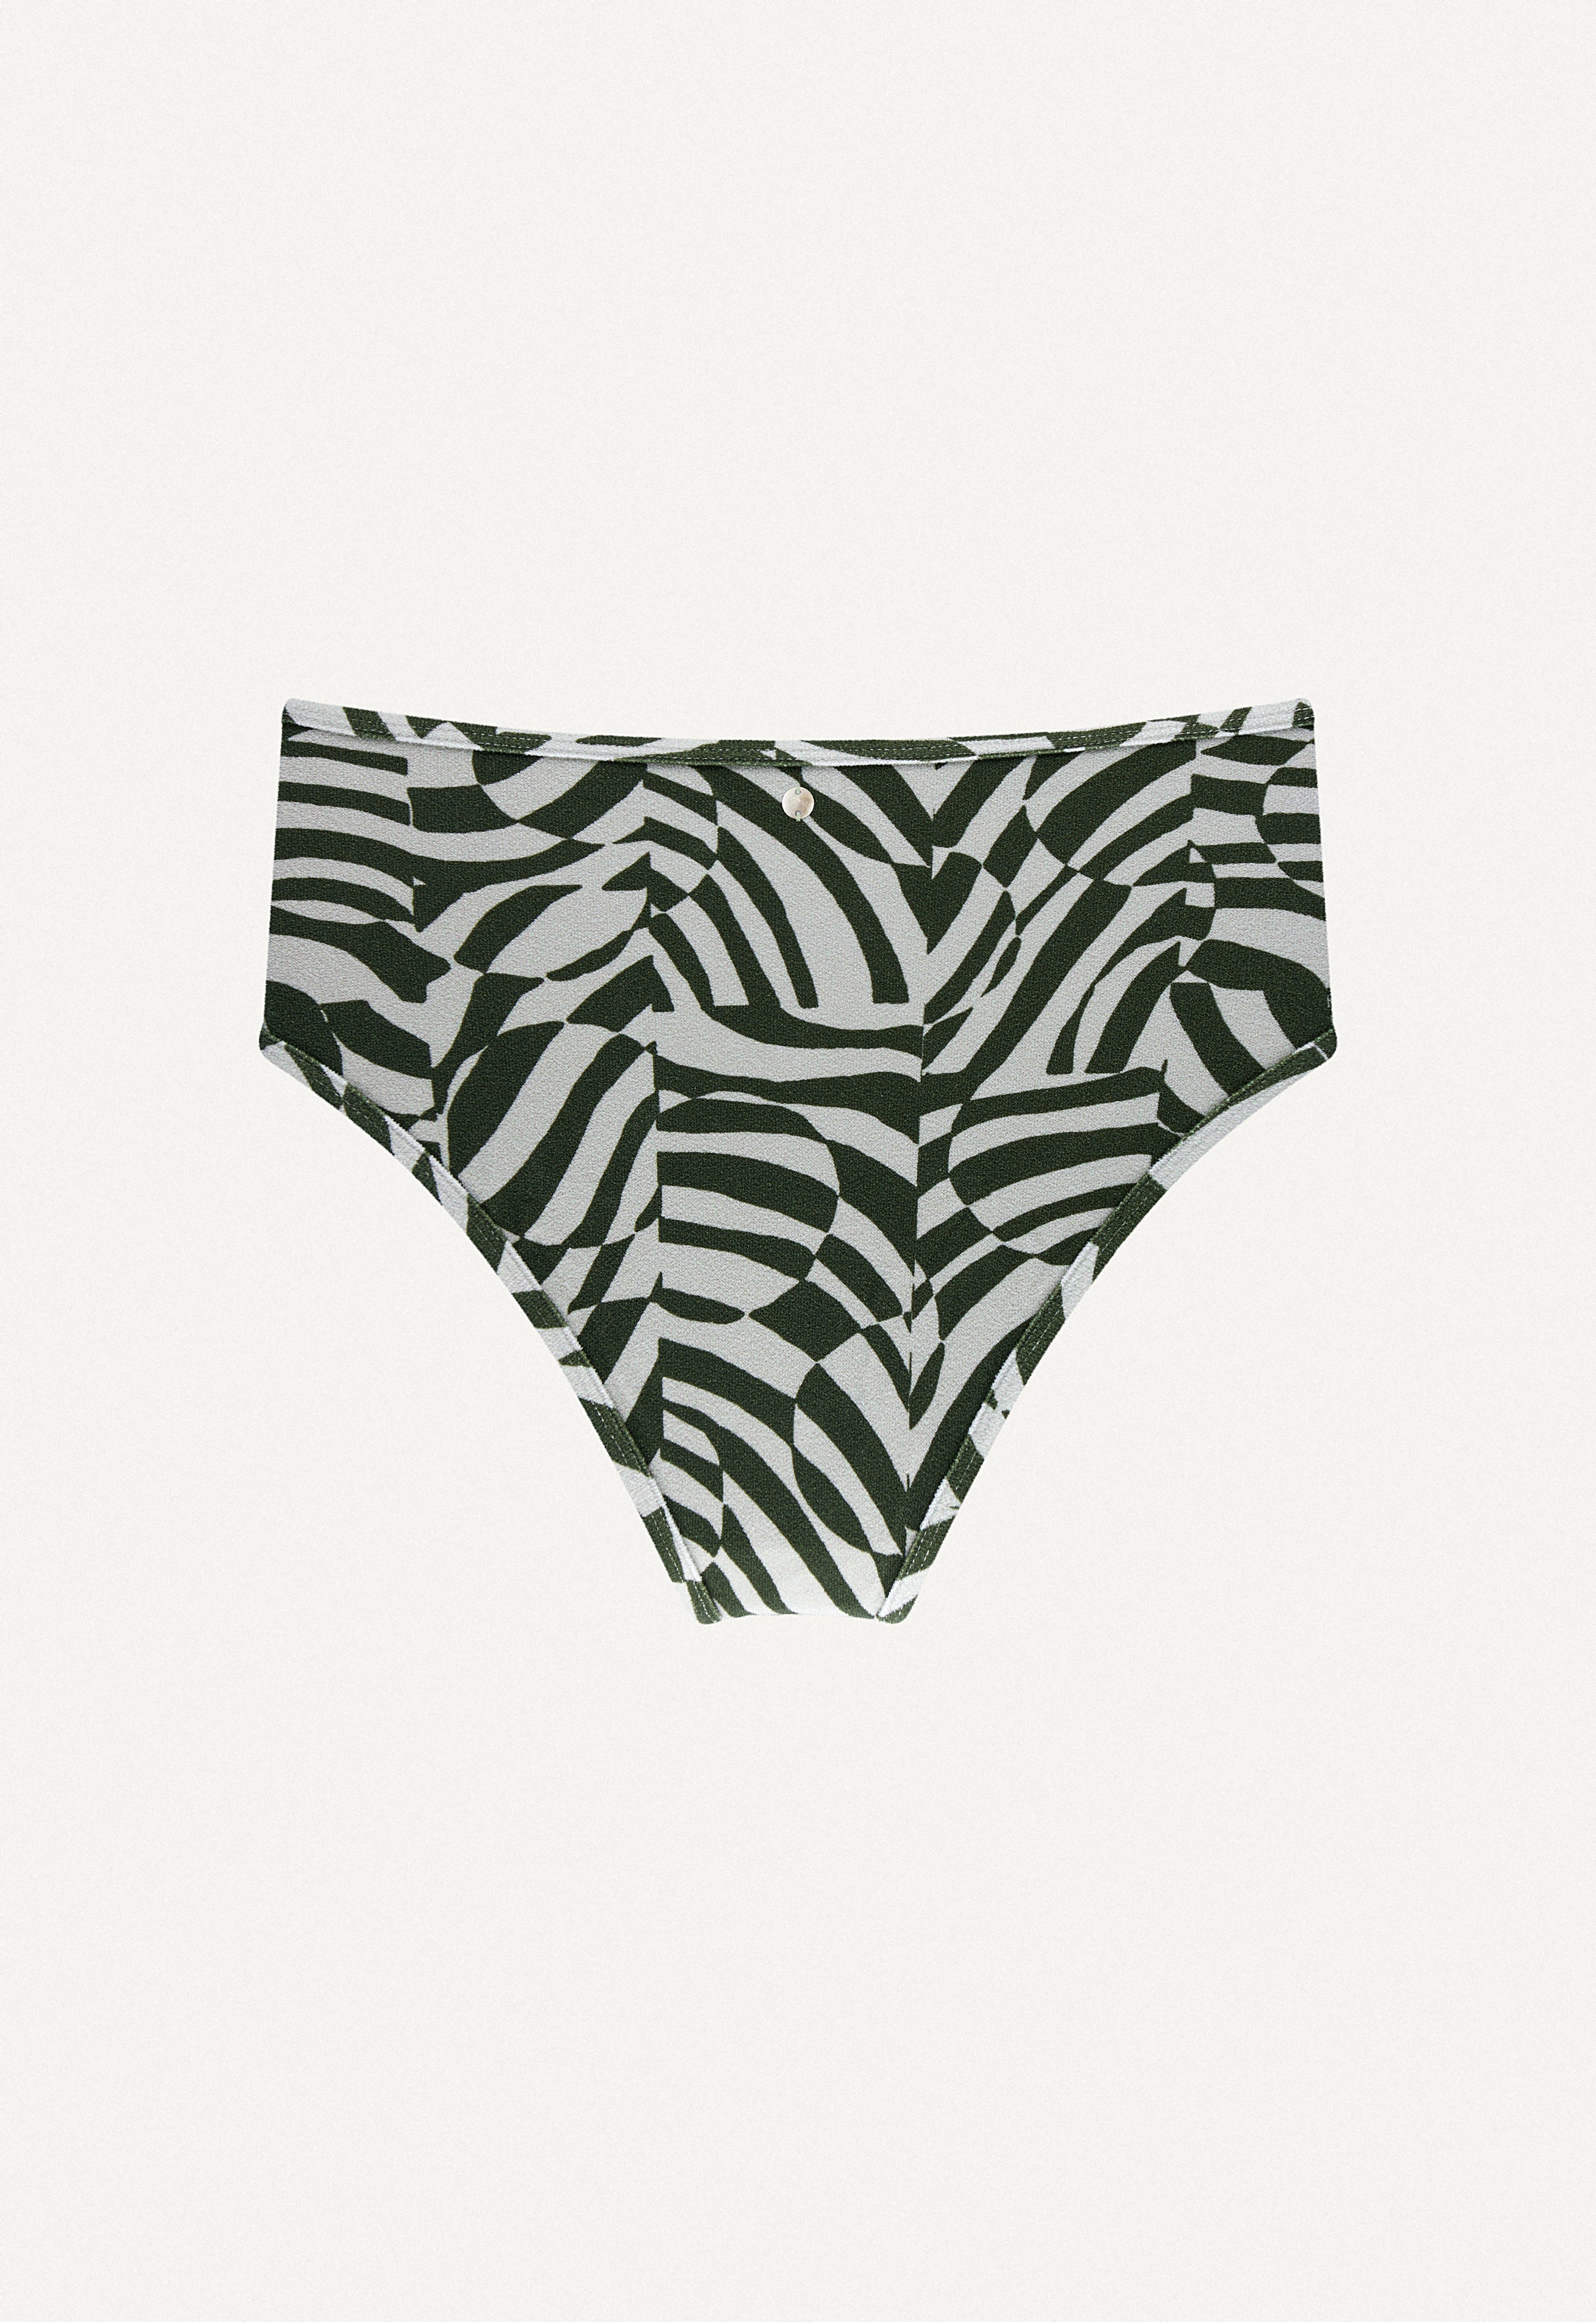 Bikini Bottom “Samun” in unreal zebra print